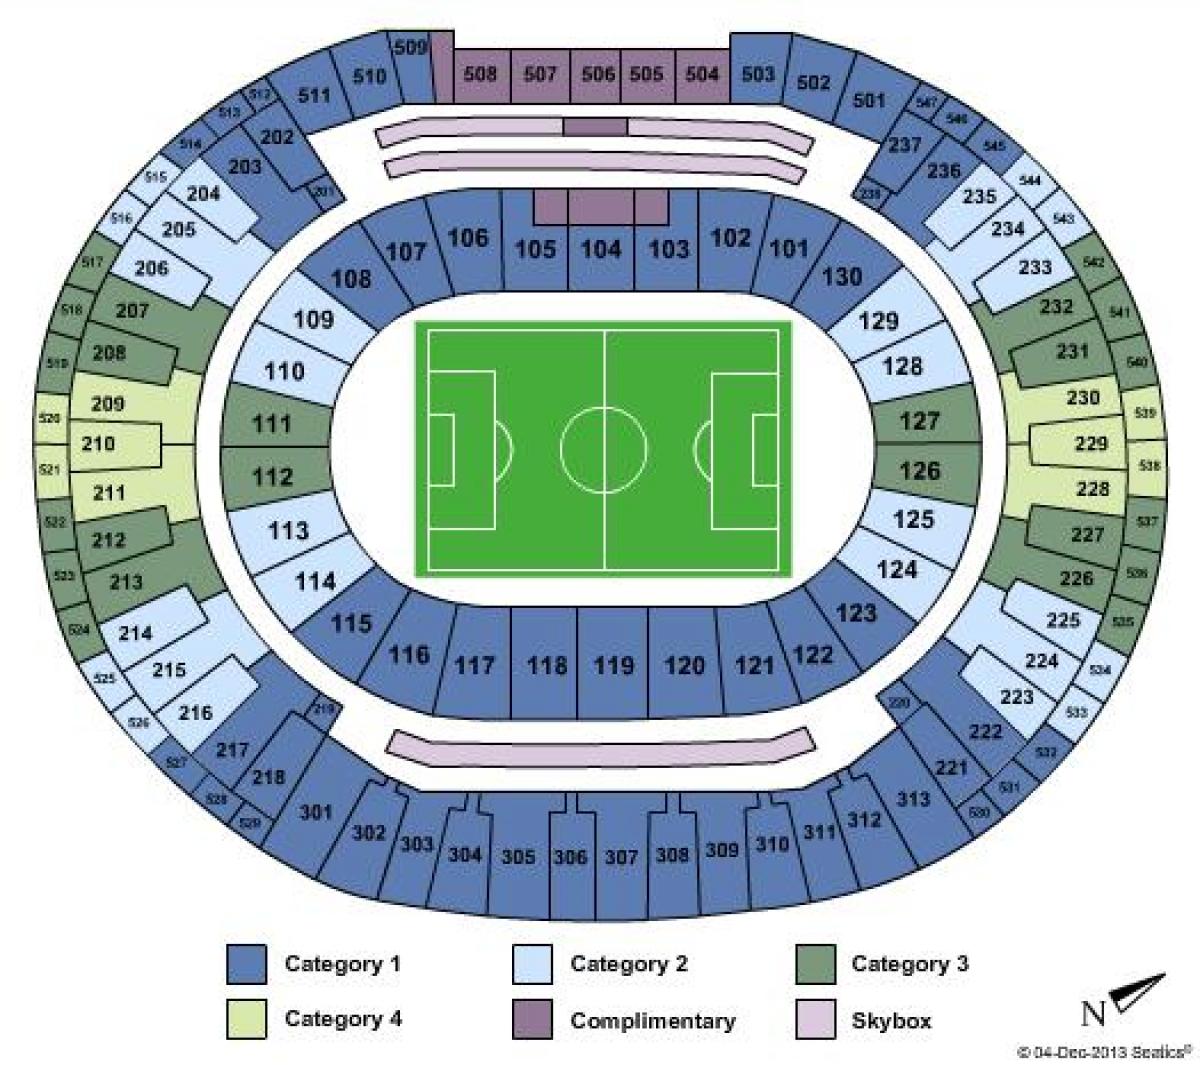 Karte von Stadion Maracanã sièges